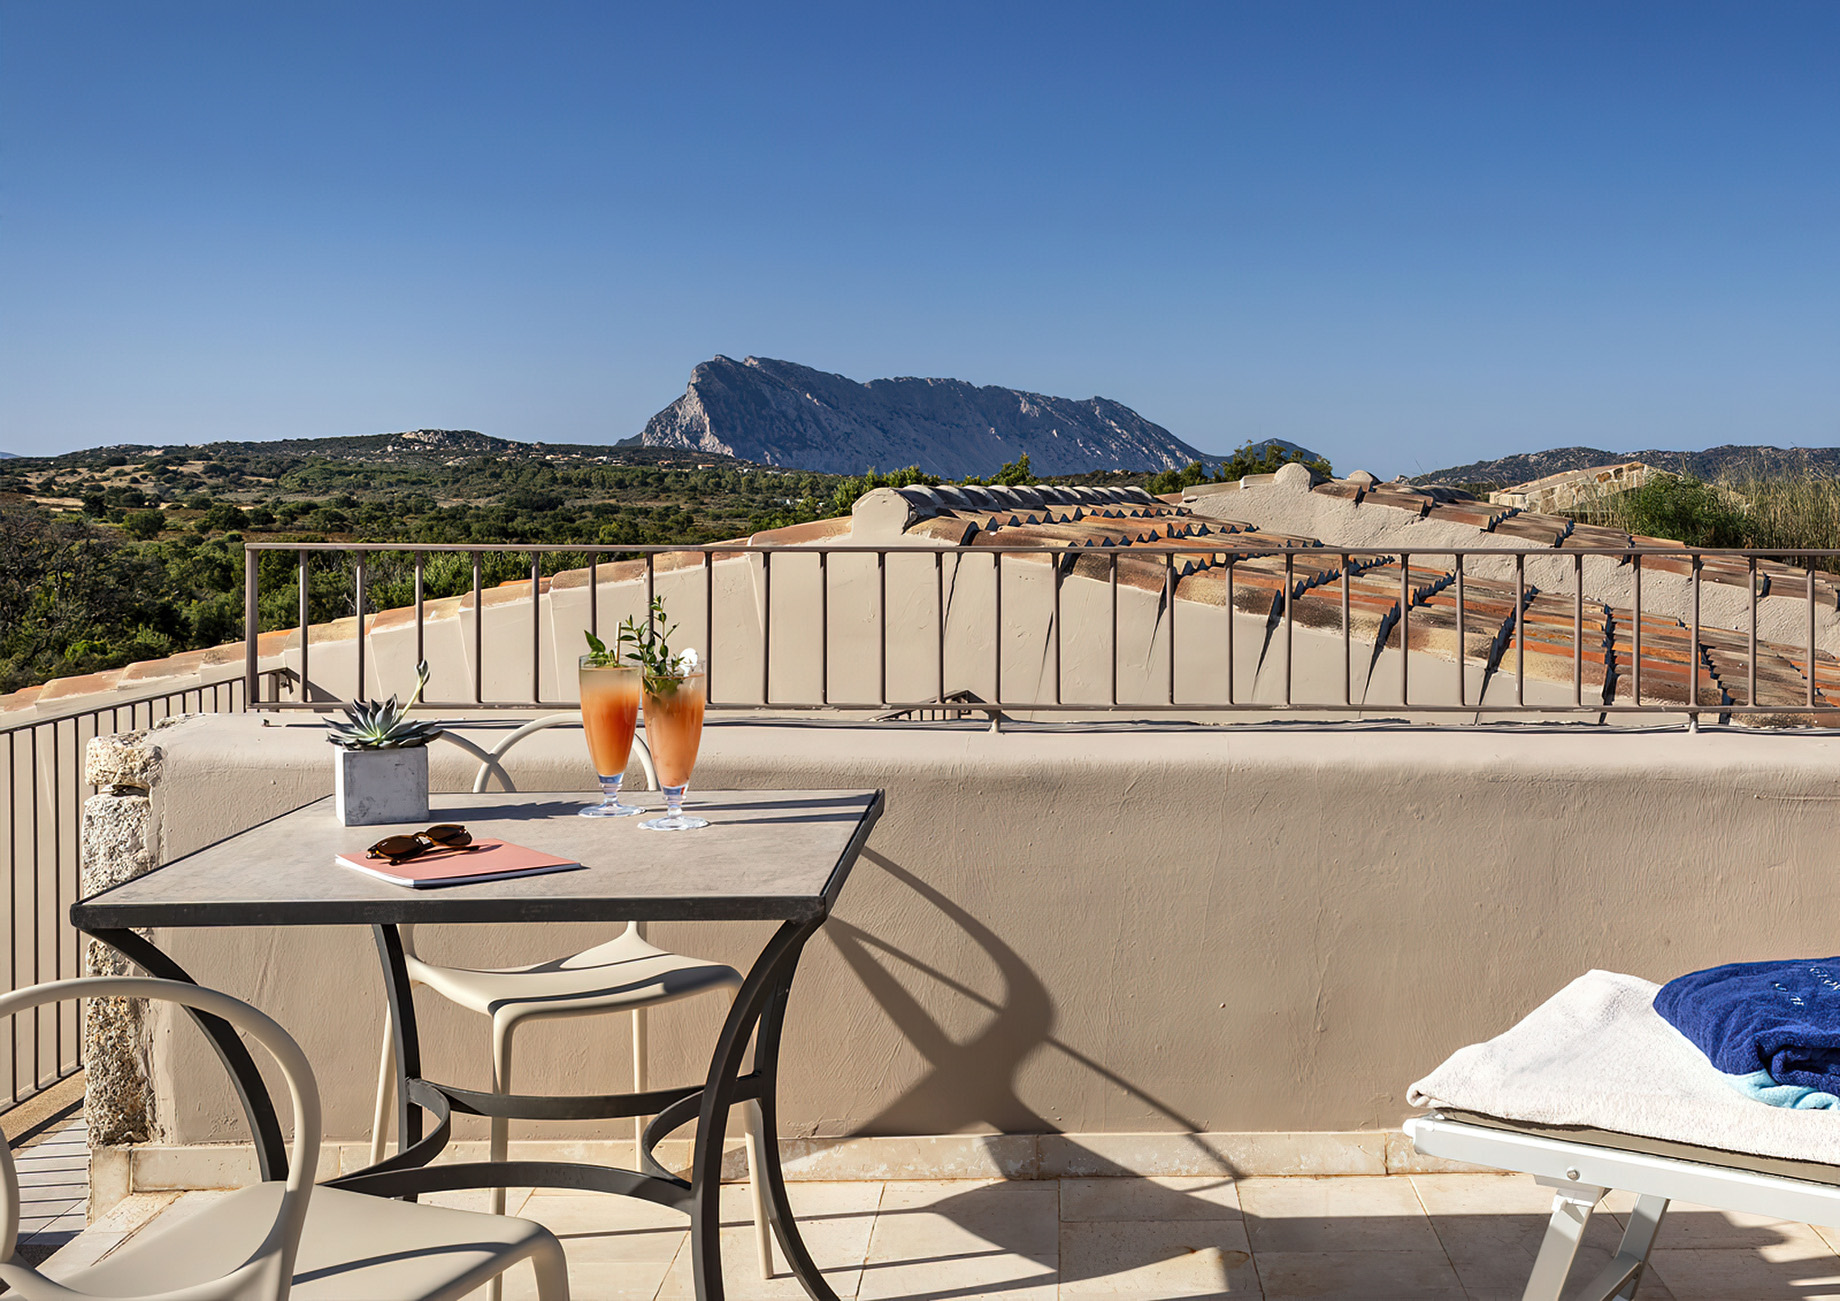 Baglioni Resort Sardinia – San Teodoro, Sardegna, Italy – Tavolara Suite Rooftop Deck Mountain View